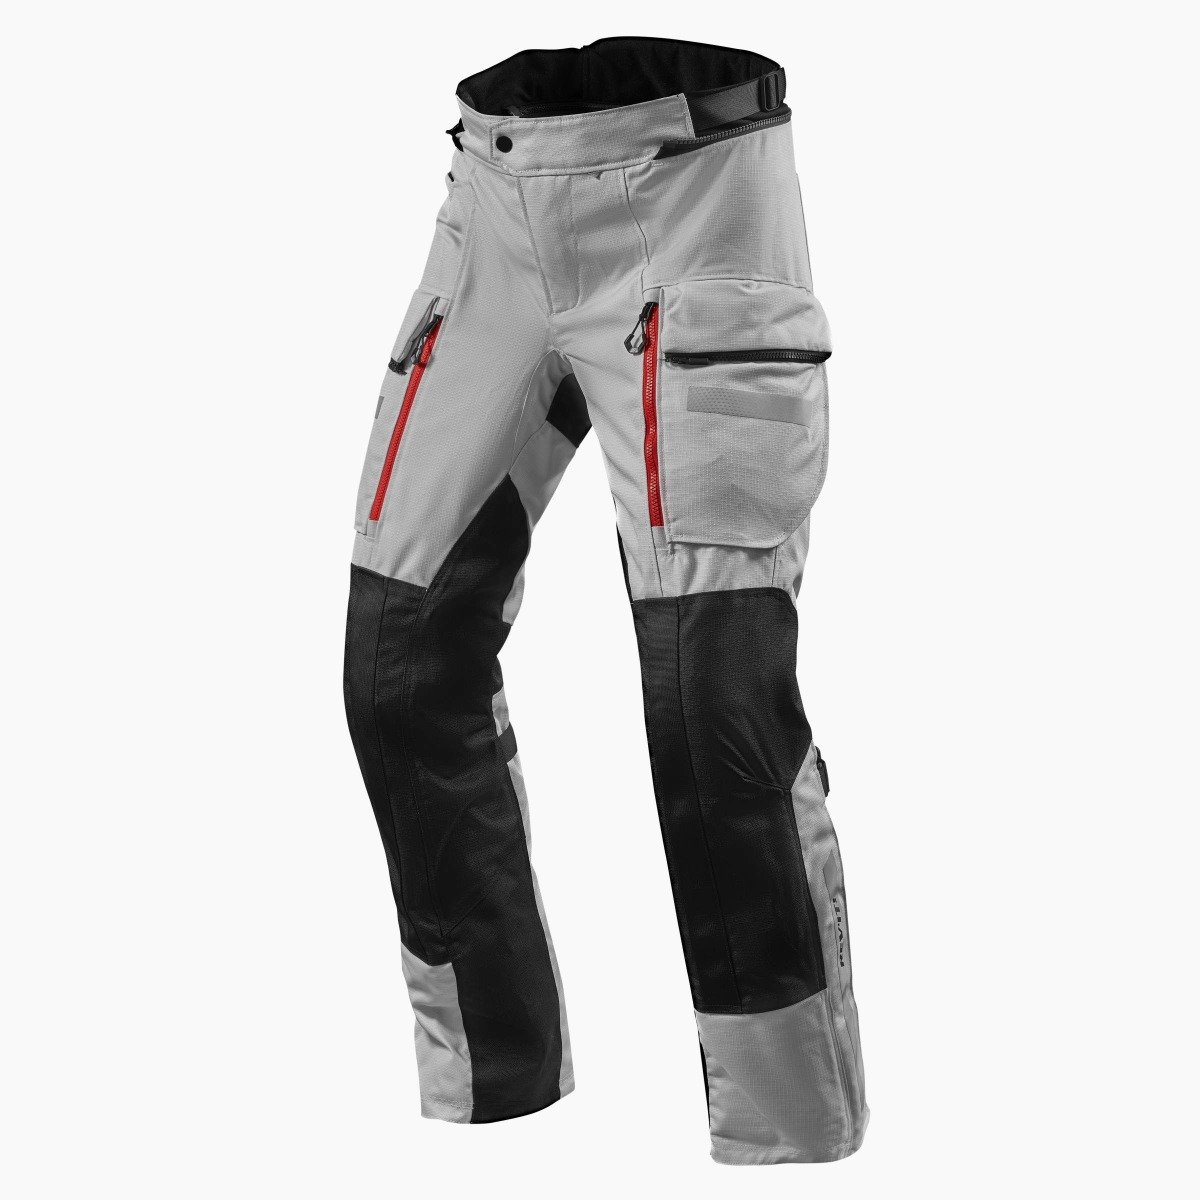 Image of REV'IT! Sand 4 H2O Standard Silver Black Motorcycle Pants Size XL EN